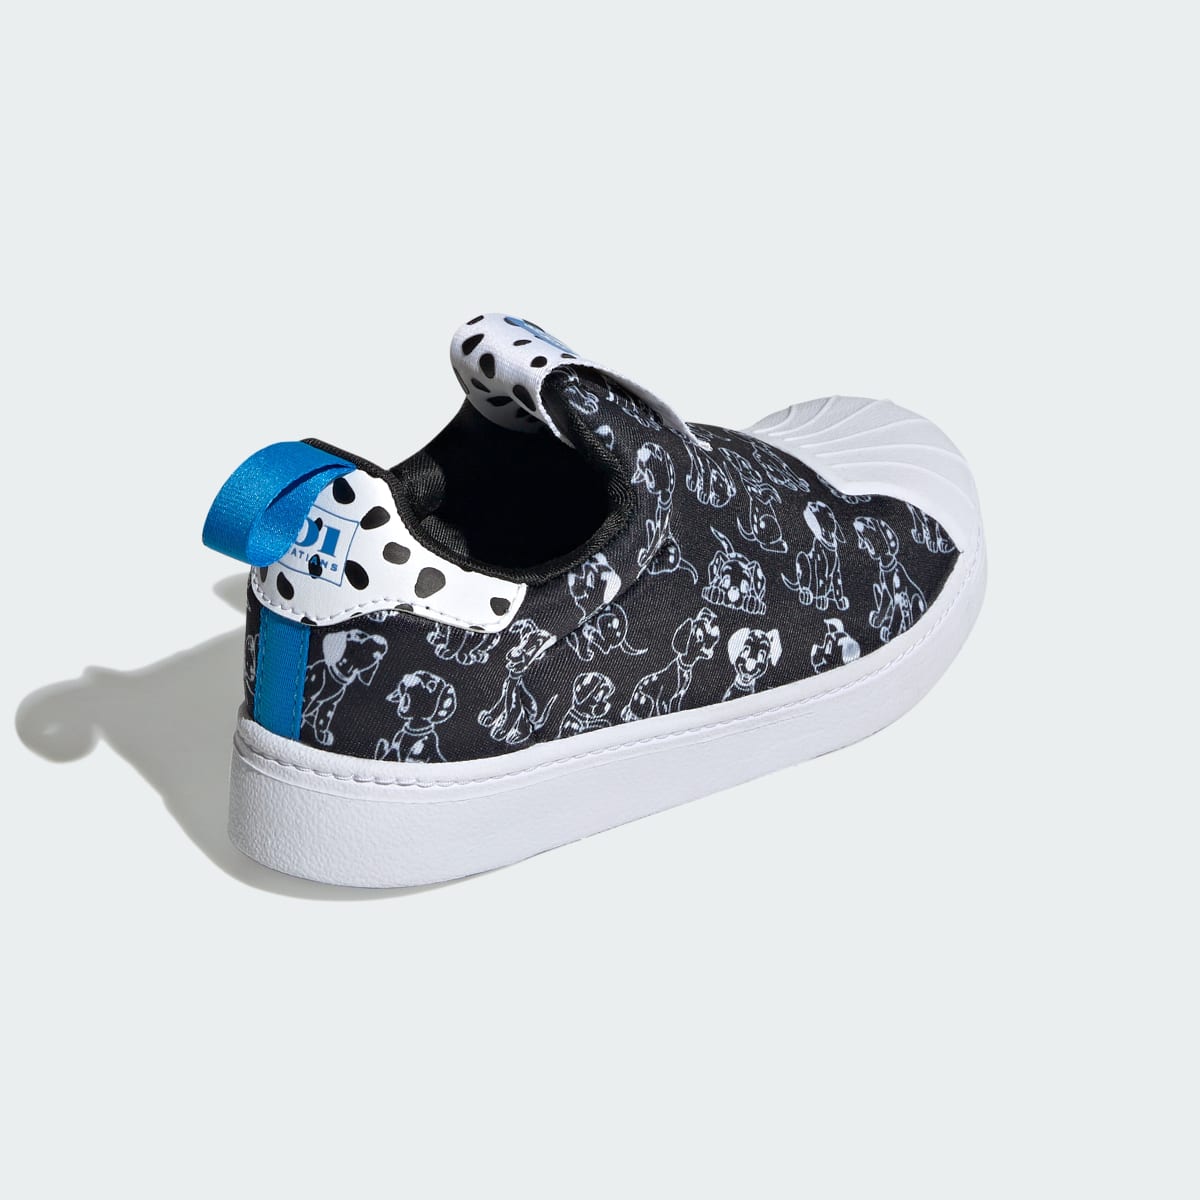 Adidas Originals x Disney 101 Dalmatians Superstar 360 Shoes Kids. 6